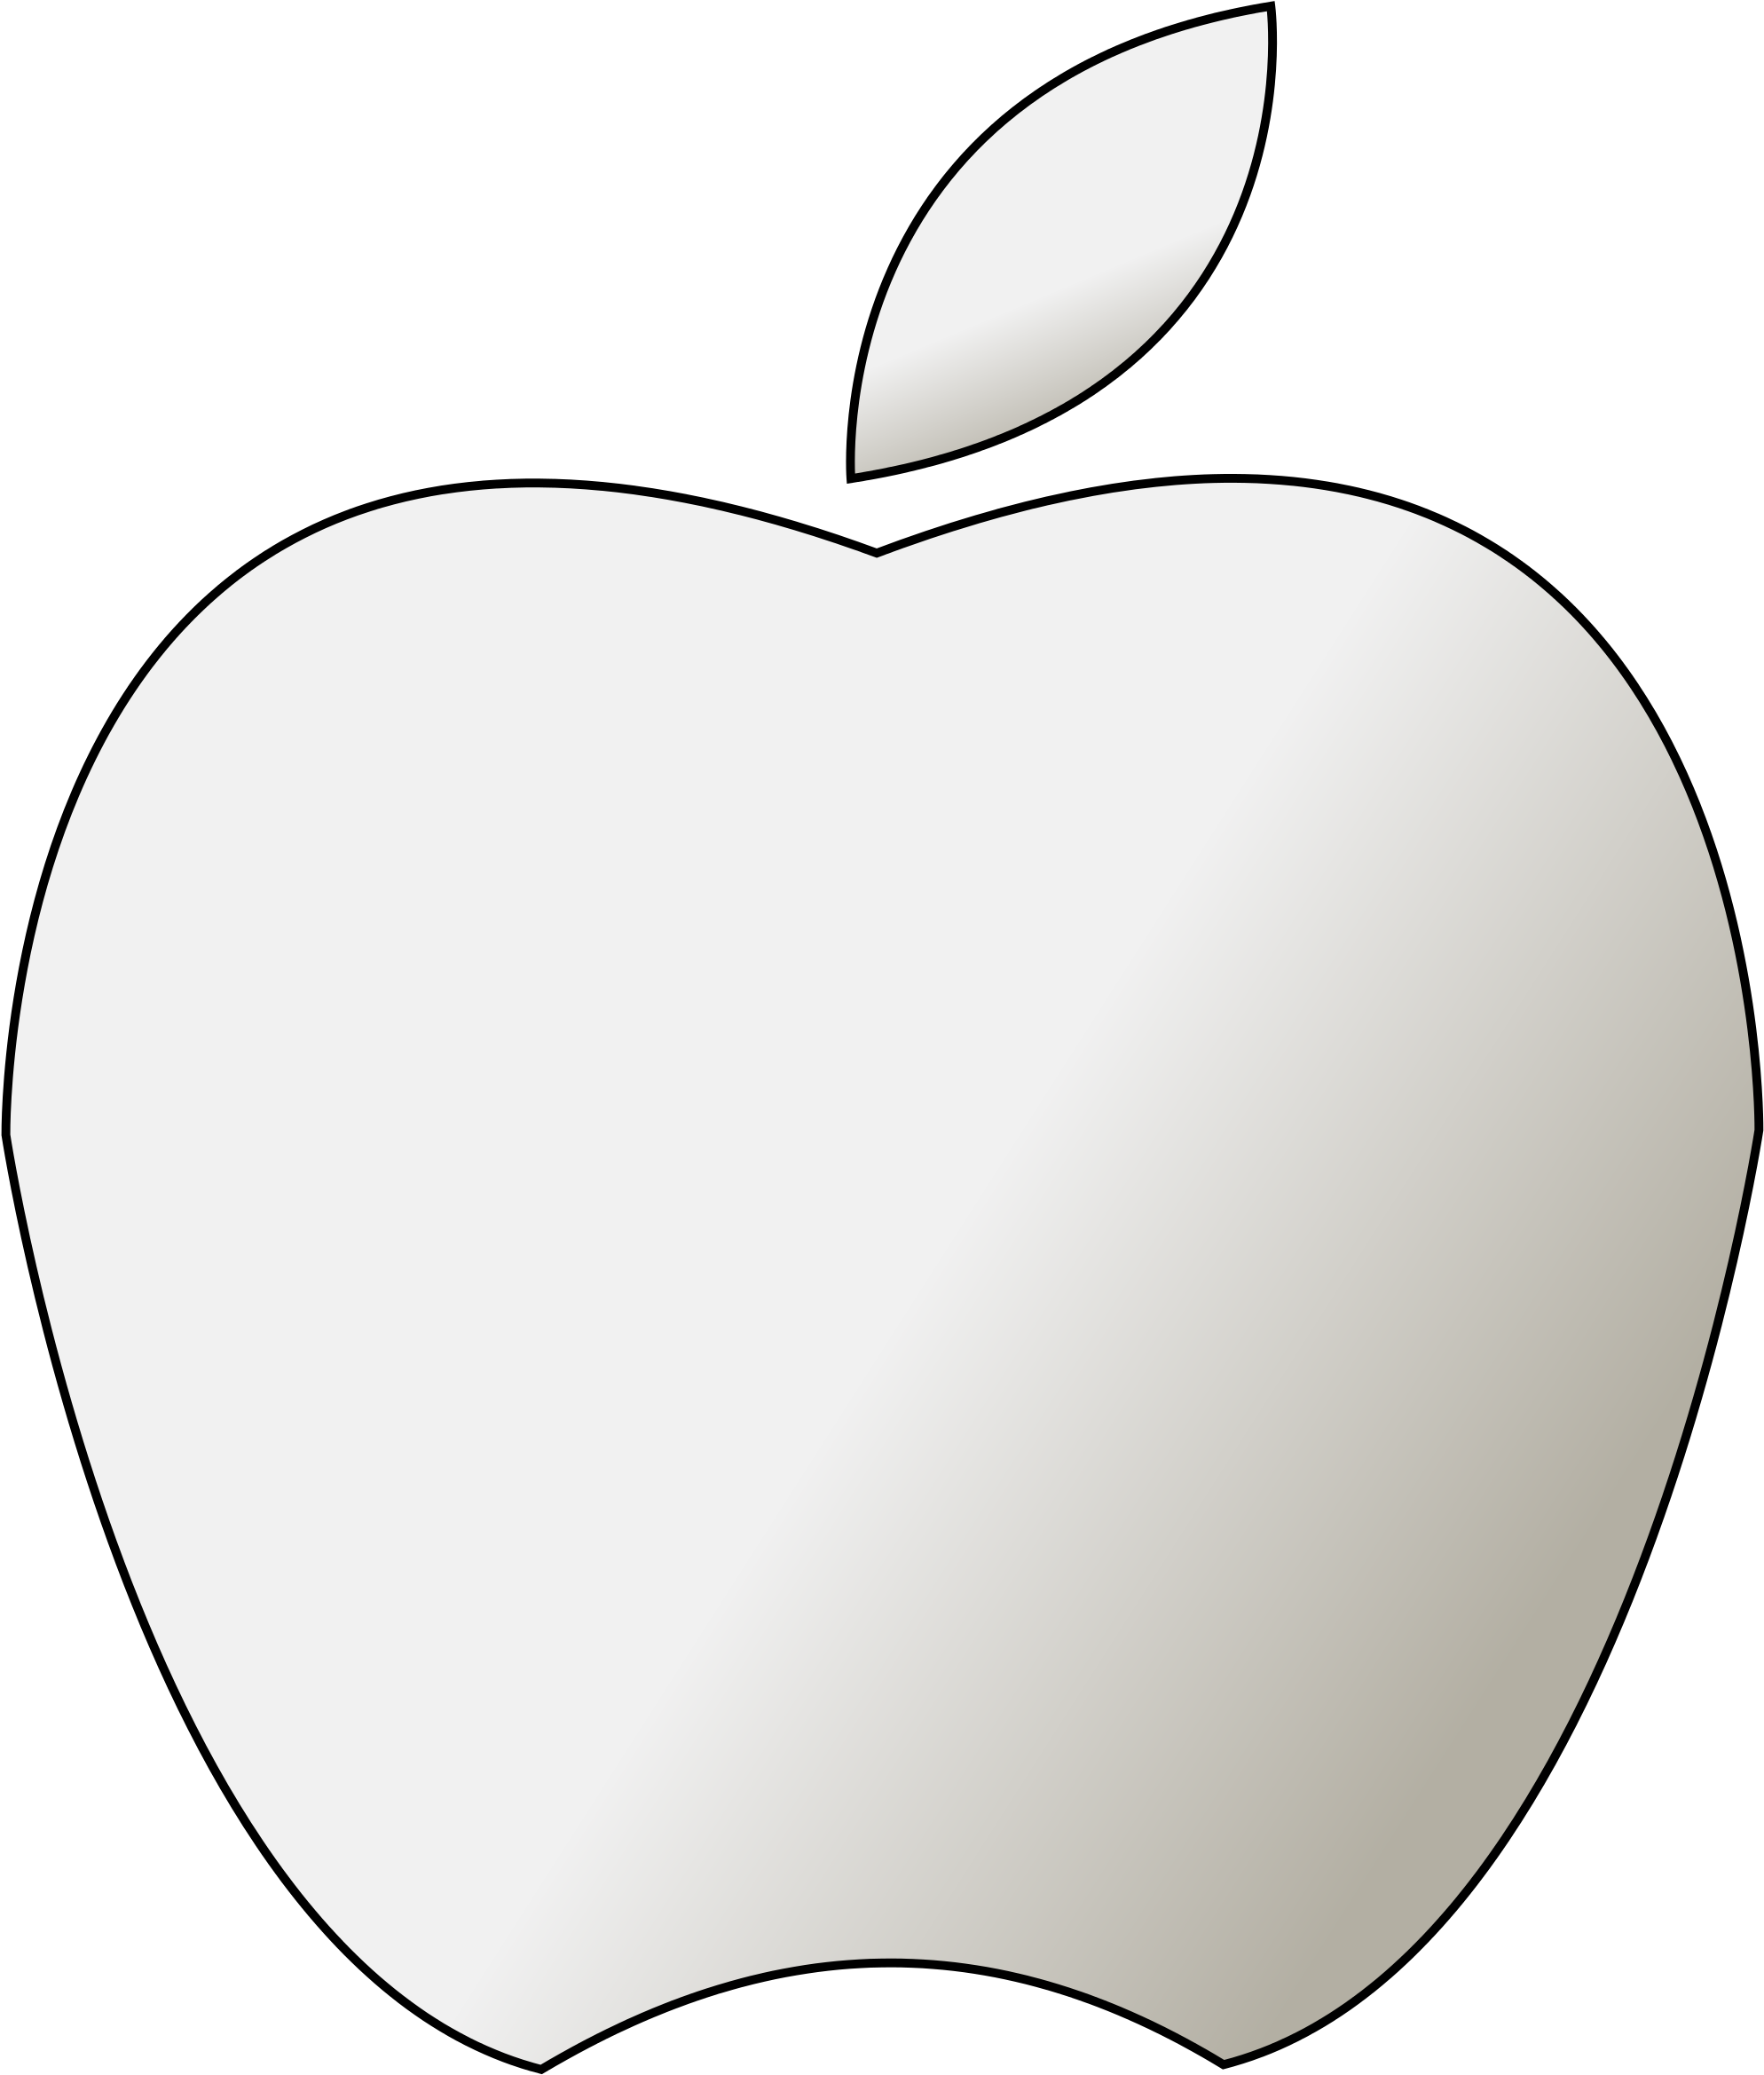 HEIF Logo on Apple iPone 7 – Stock Editorial Photo © aa-w #157827728